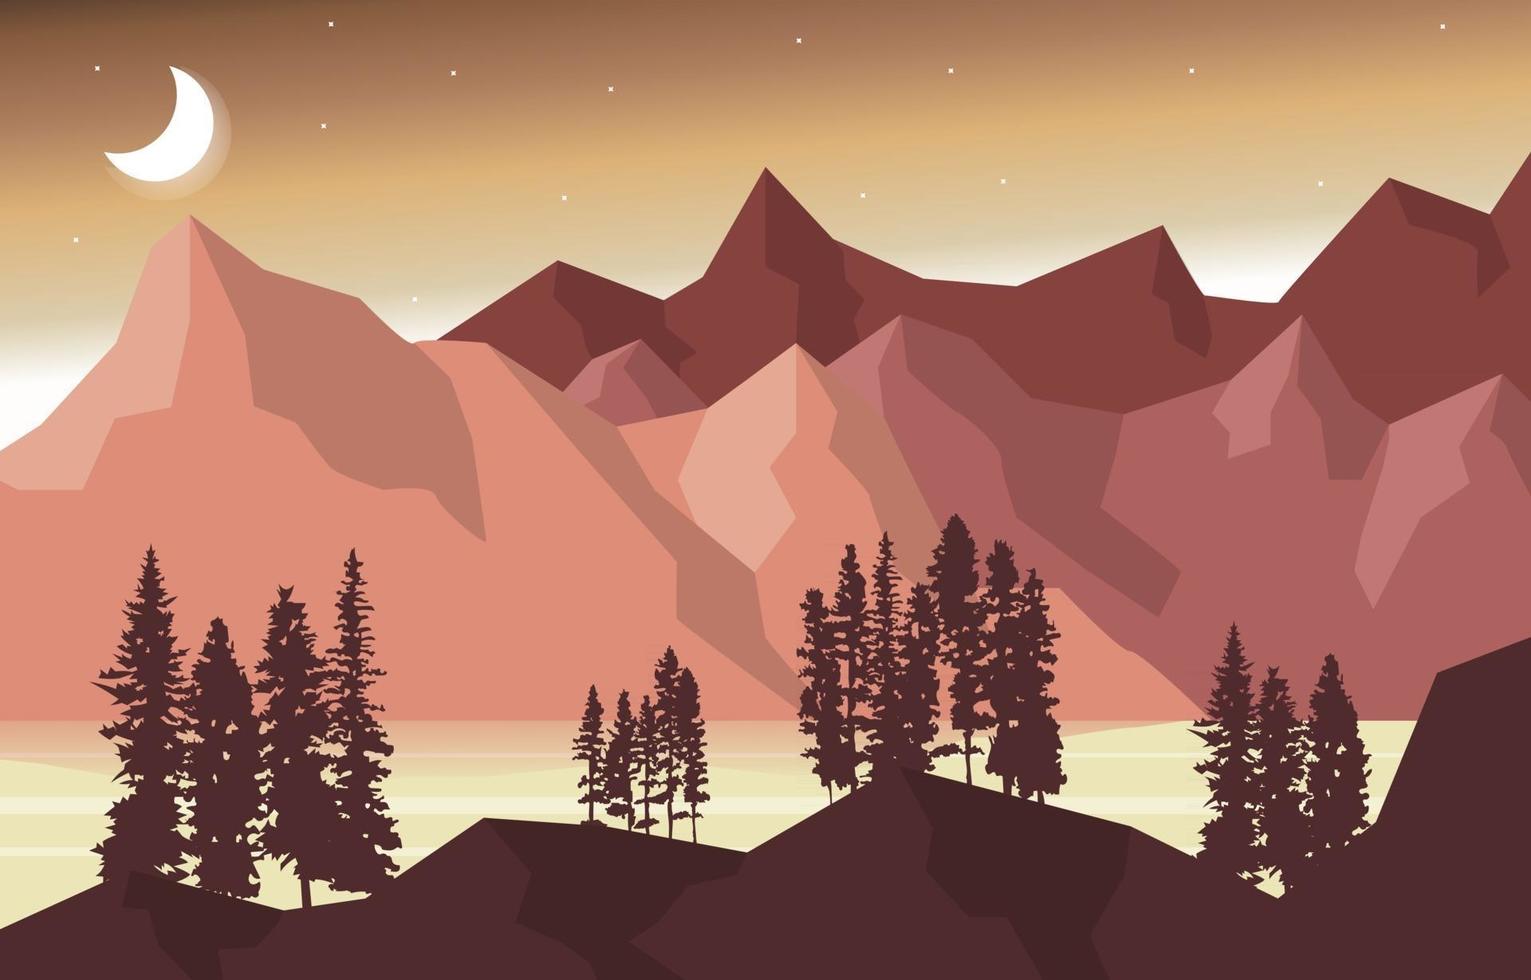 Night Mountain Peak Pine Trees Nature Landscape Adventure Illustration vector